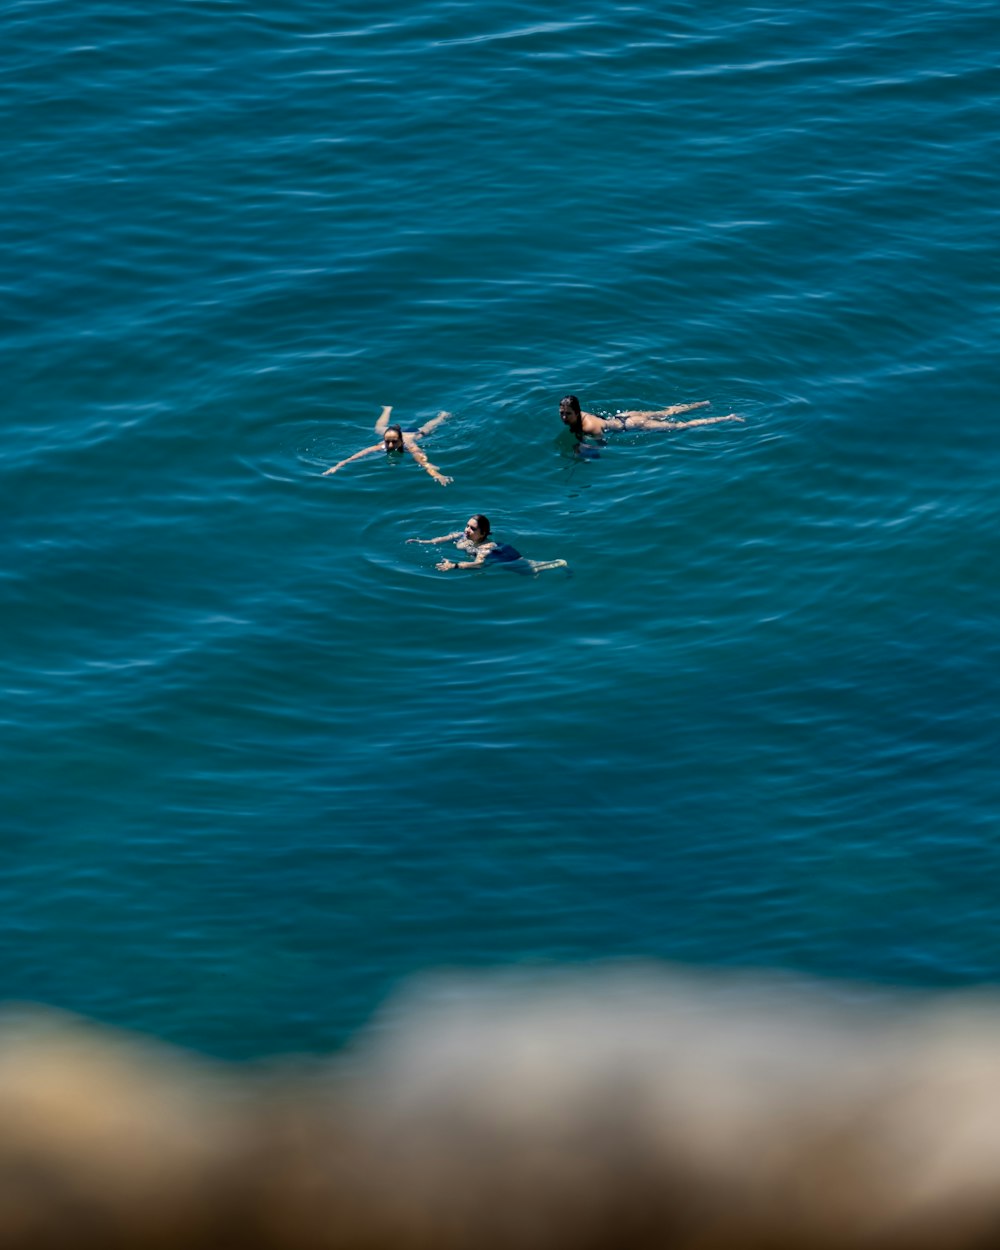 man surfing on blue sea during daytime